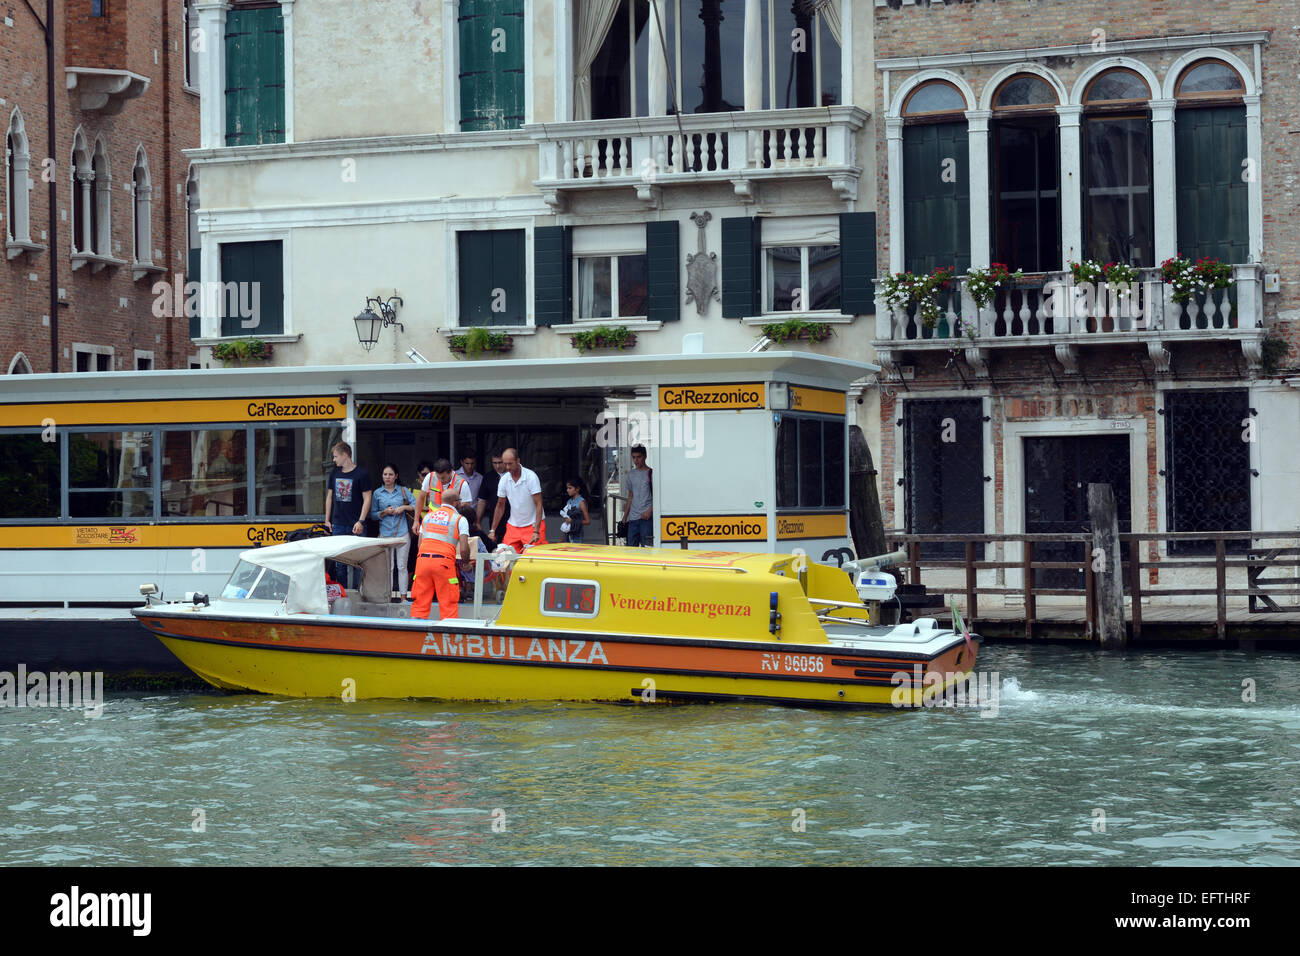 Water ambulance, Venice, Italy. Stock Photo